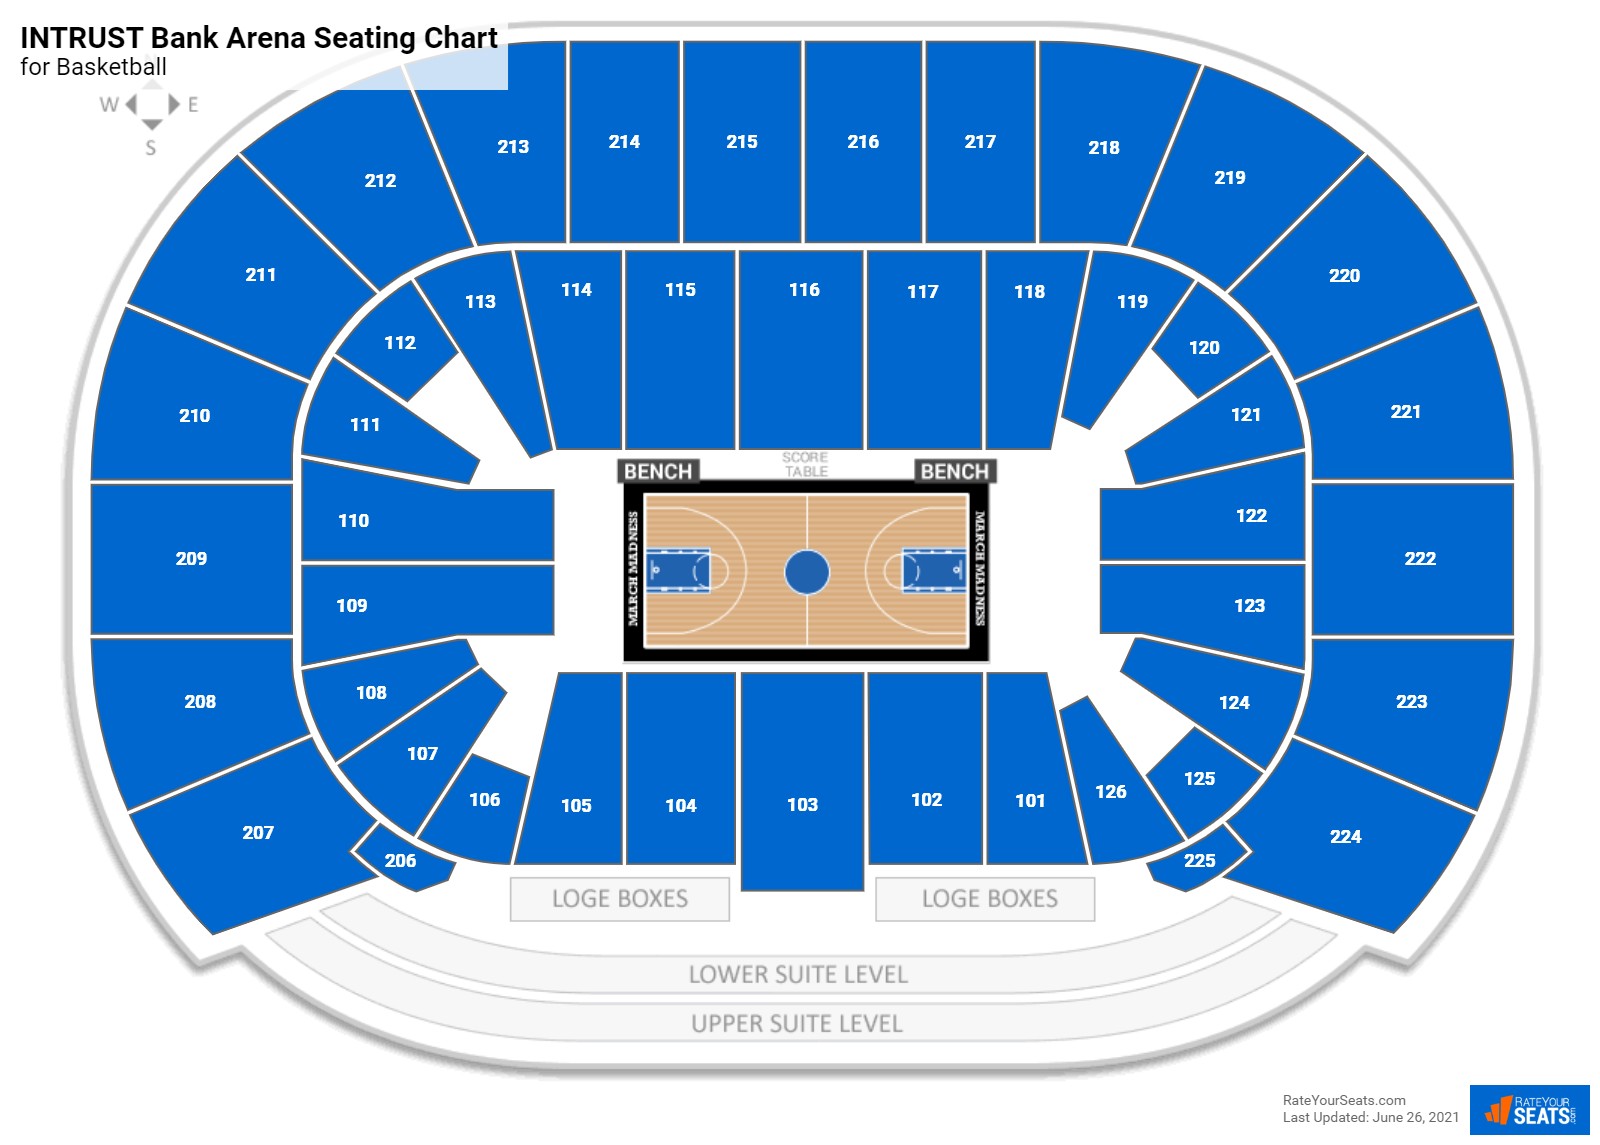 INTRUST Bank Arena Basketball Seating Chart